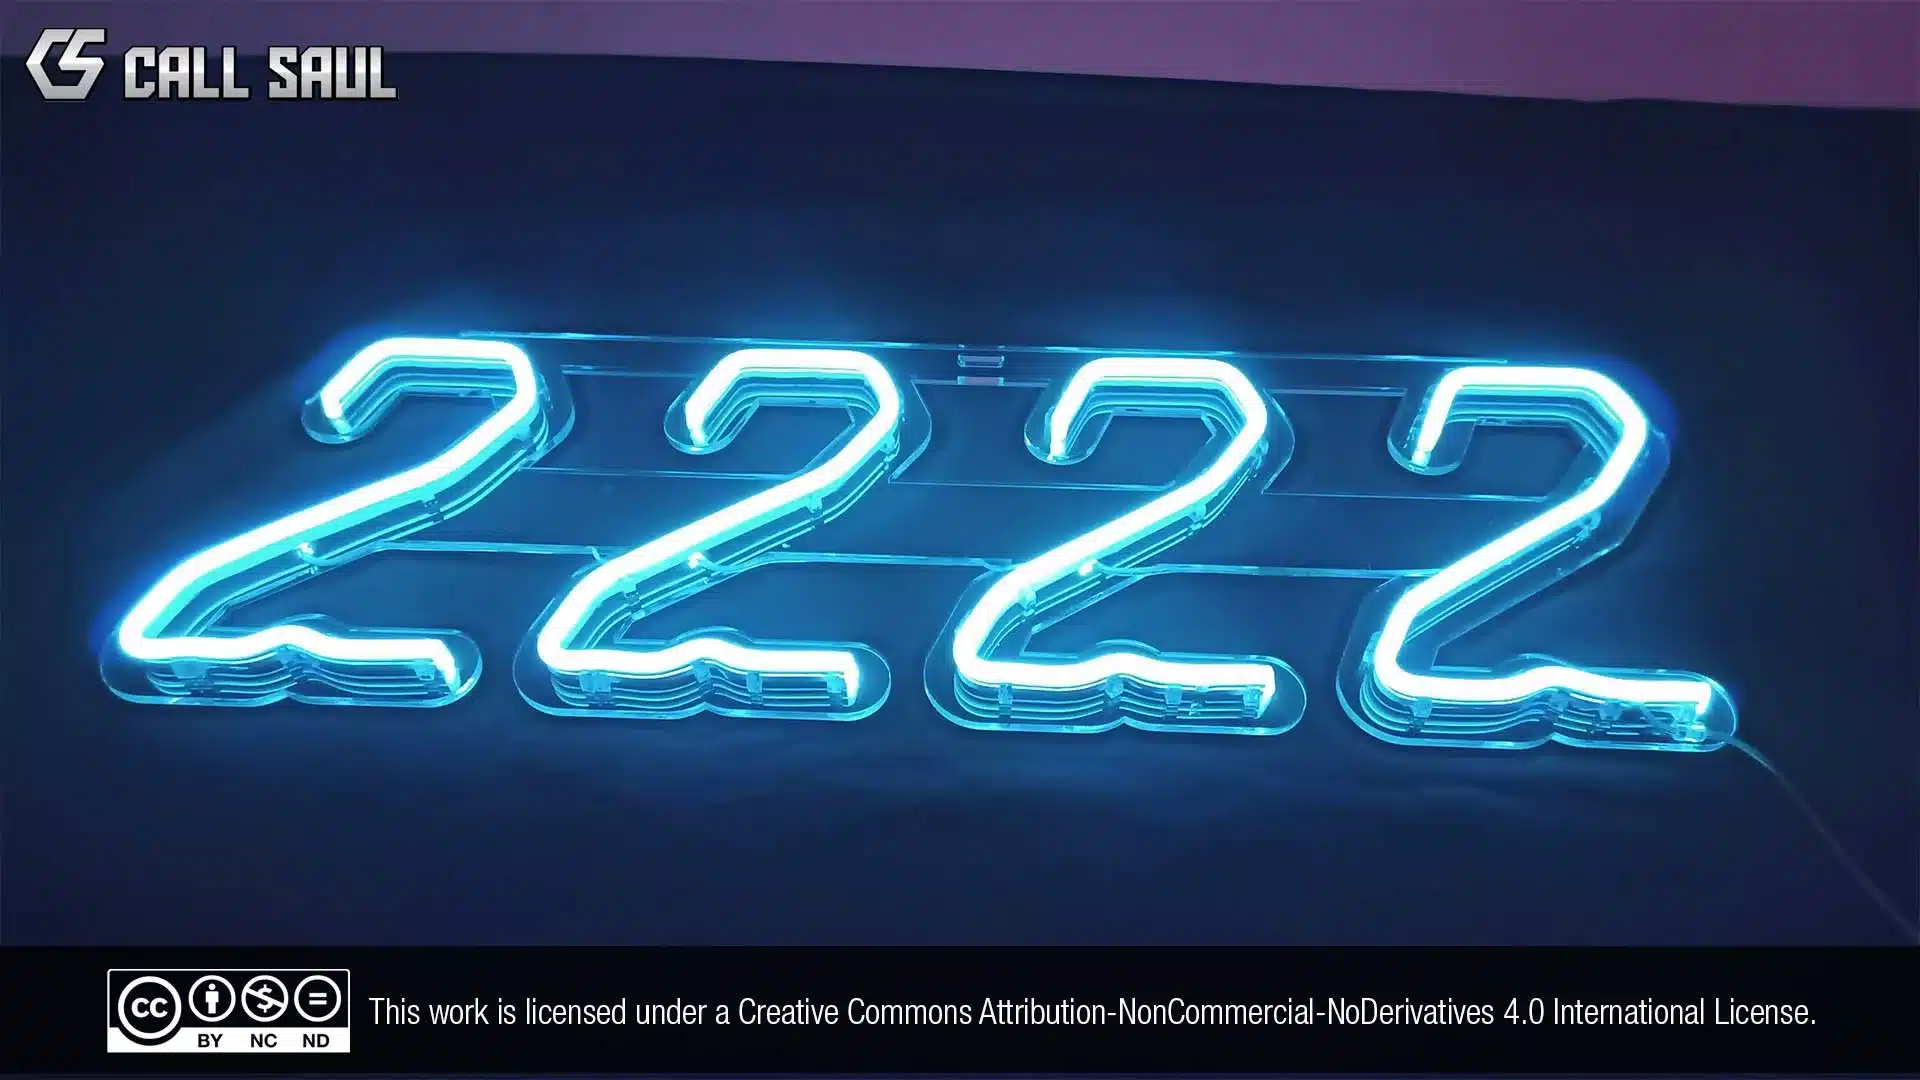 2222 Blue Color LED Neon Sign